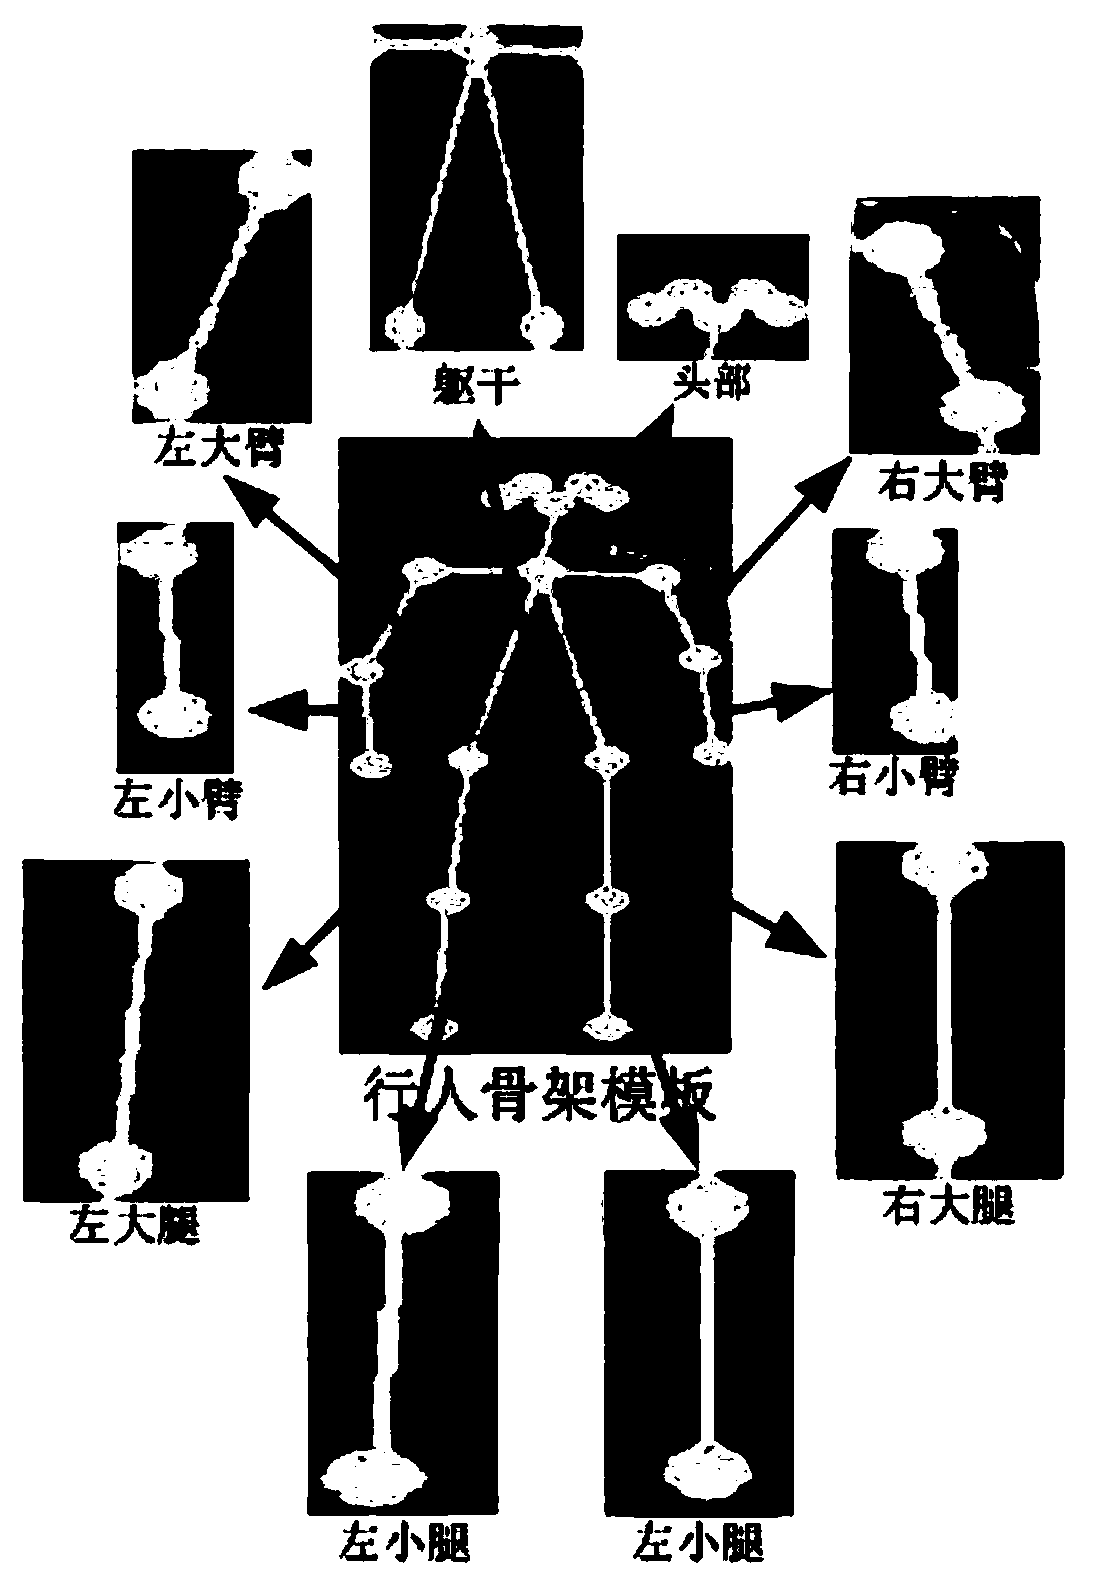 Pedestrian re-identification method based on a skeleton posture